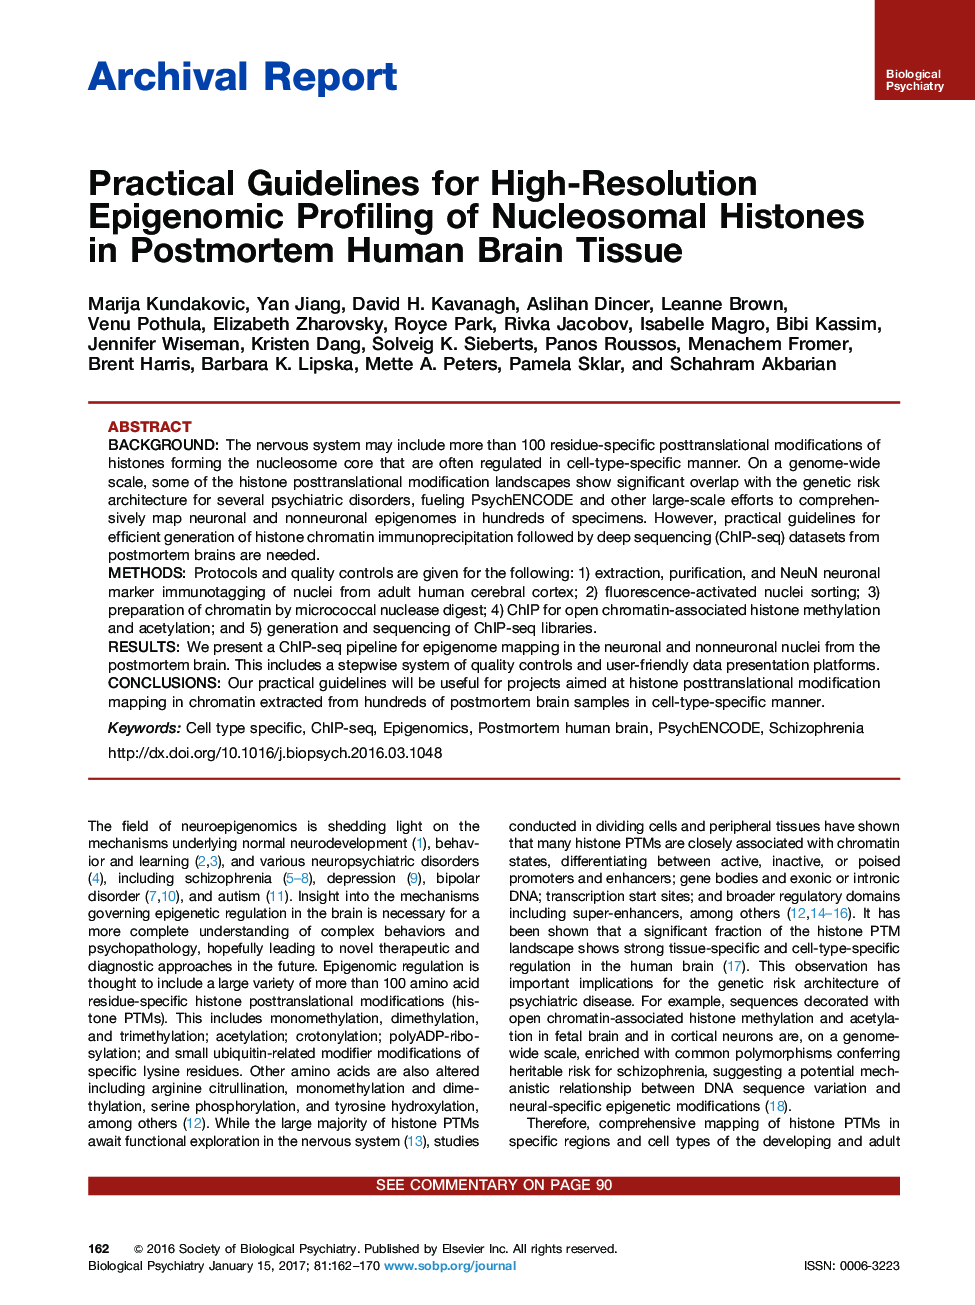 Archival ReportPractical Guidelines for High-Resolution Epigenomic Profiling of Nucleosomal Histones in Postmortem Human Brain Tissue